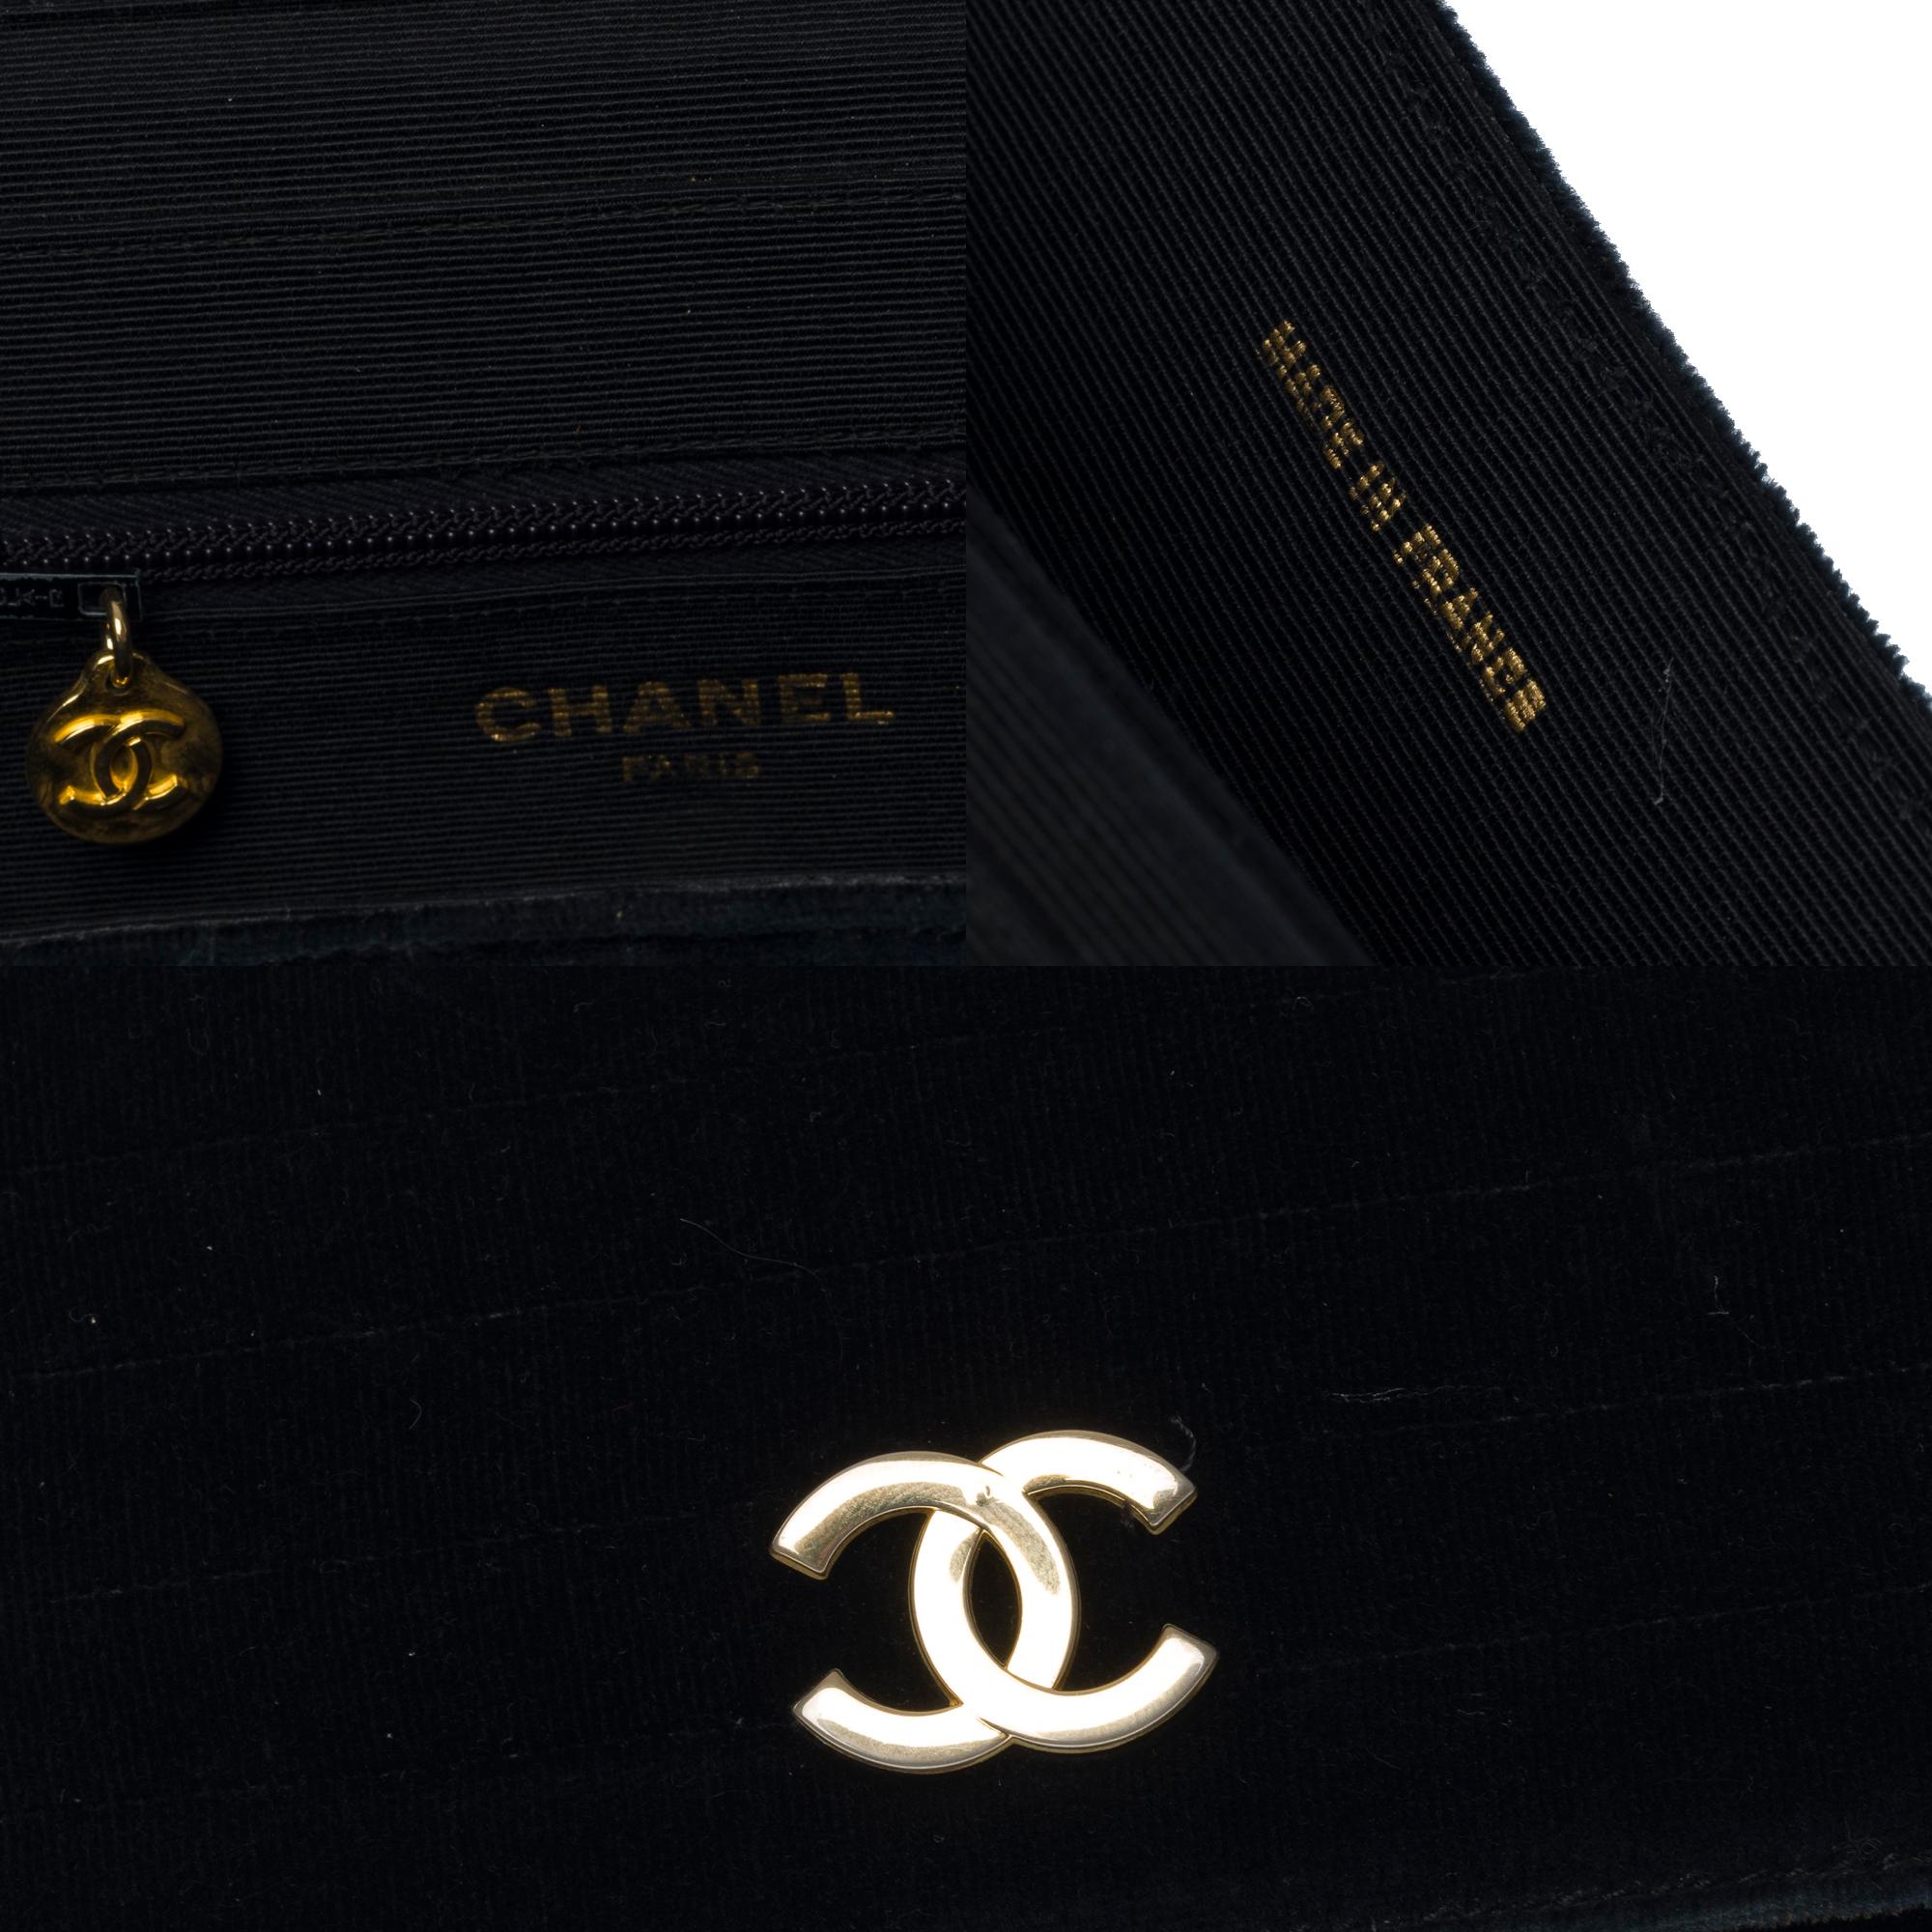 Rare Chanel Classic shoulder flap bag in black velvet, GHW 2